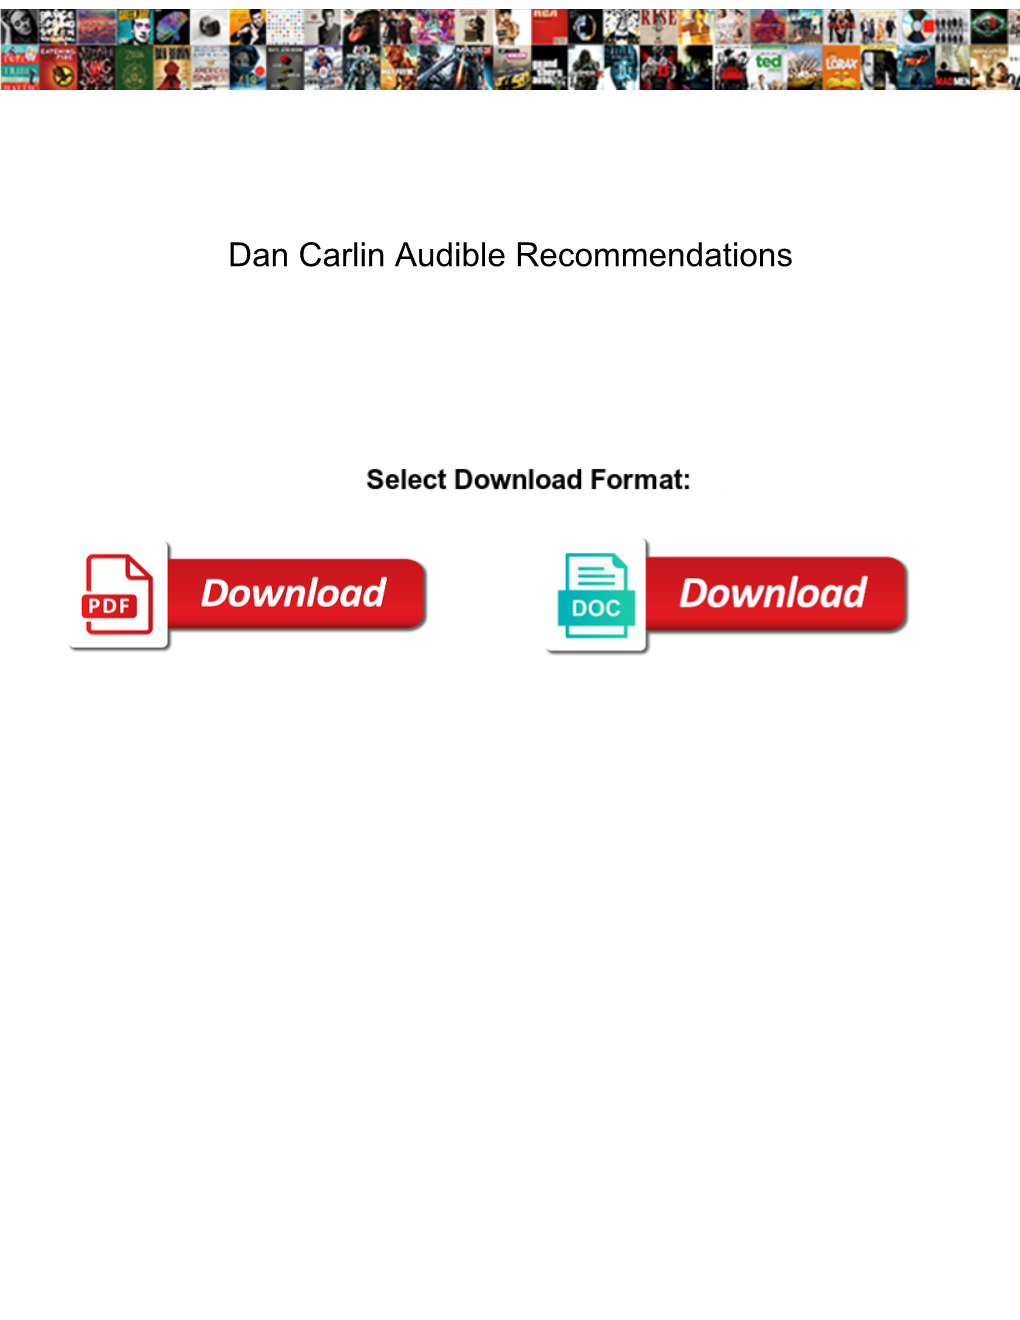 Dan Carlin Audible Recommendations